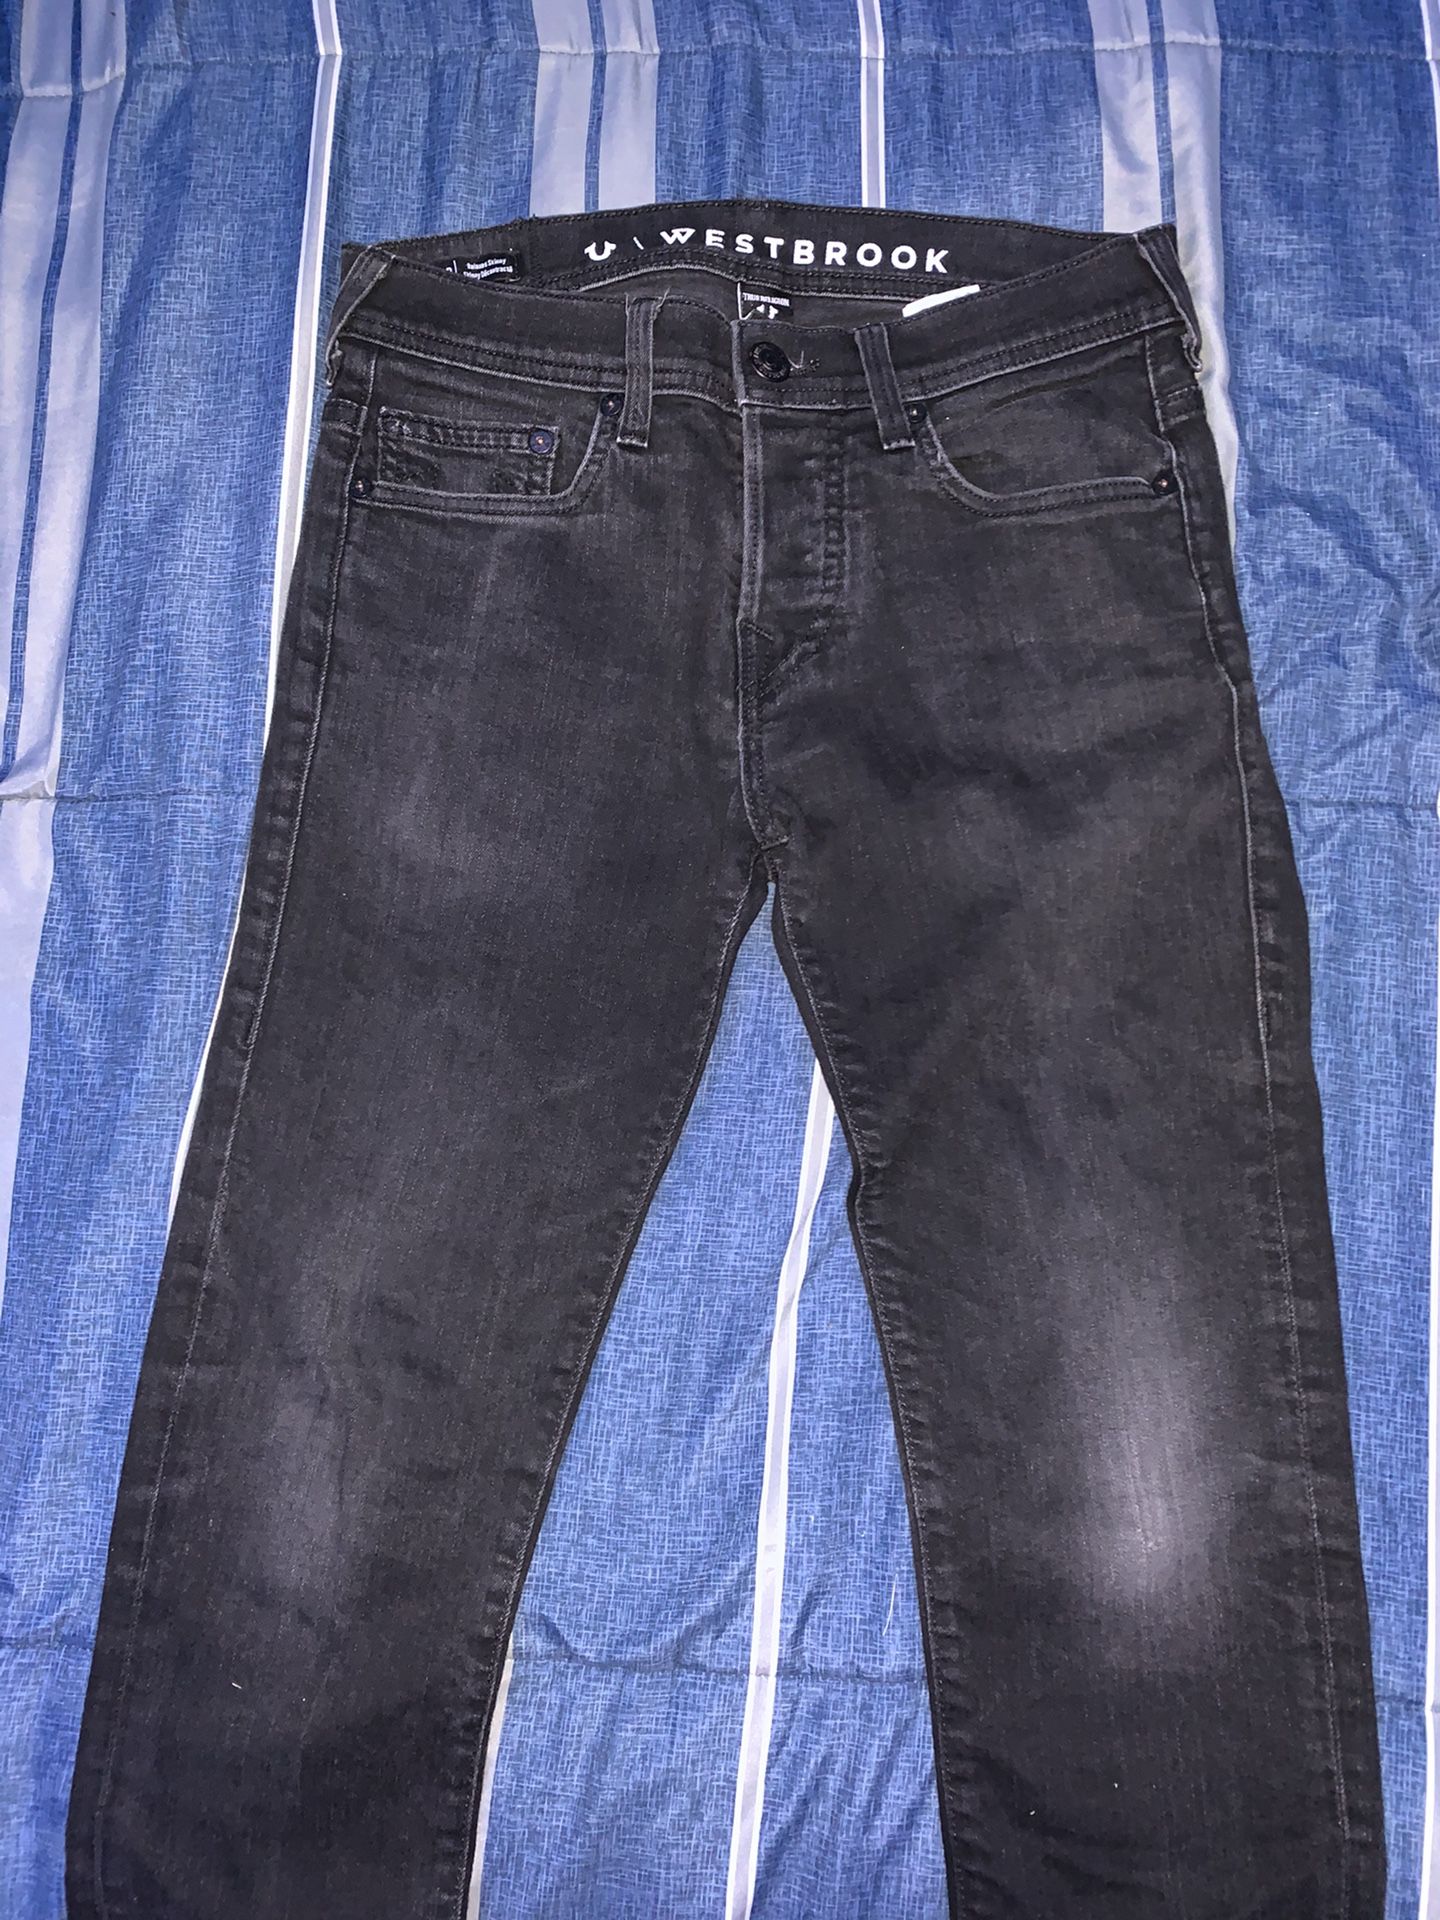 True religion jeans all black. 45$